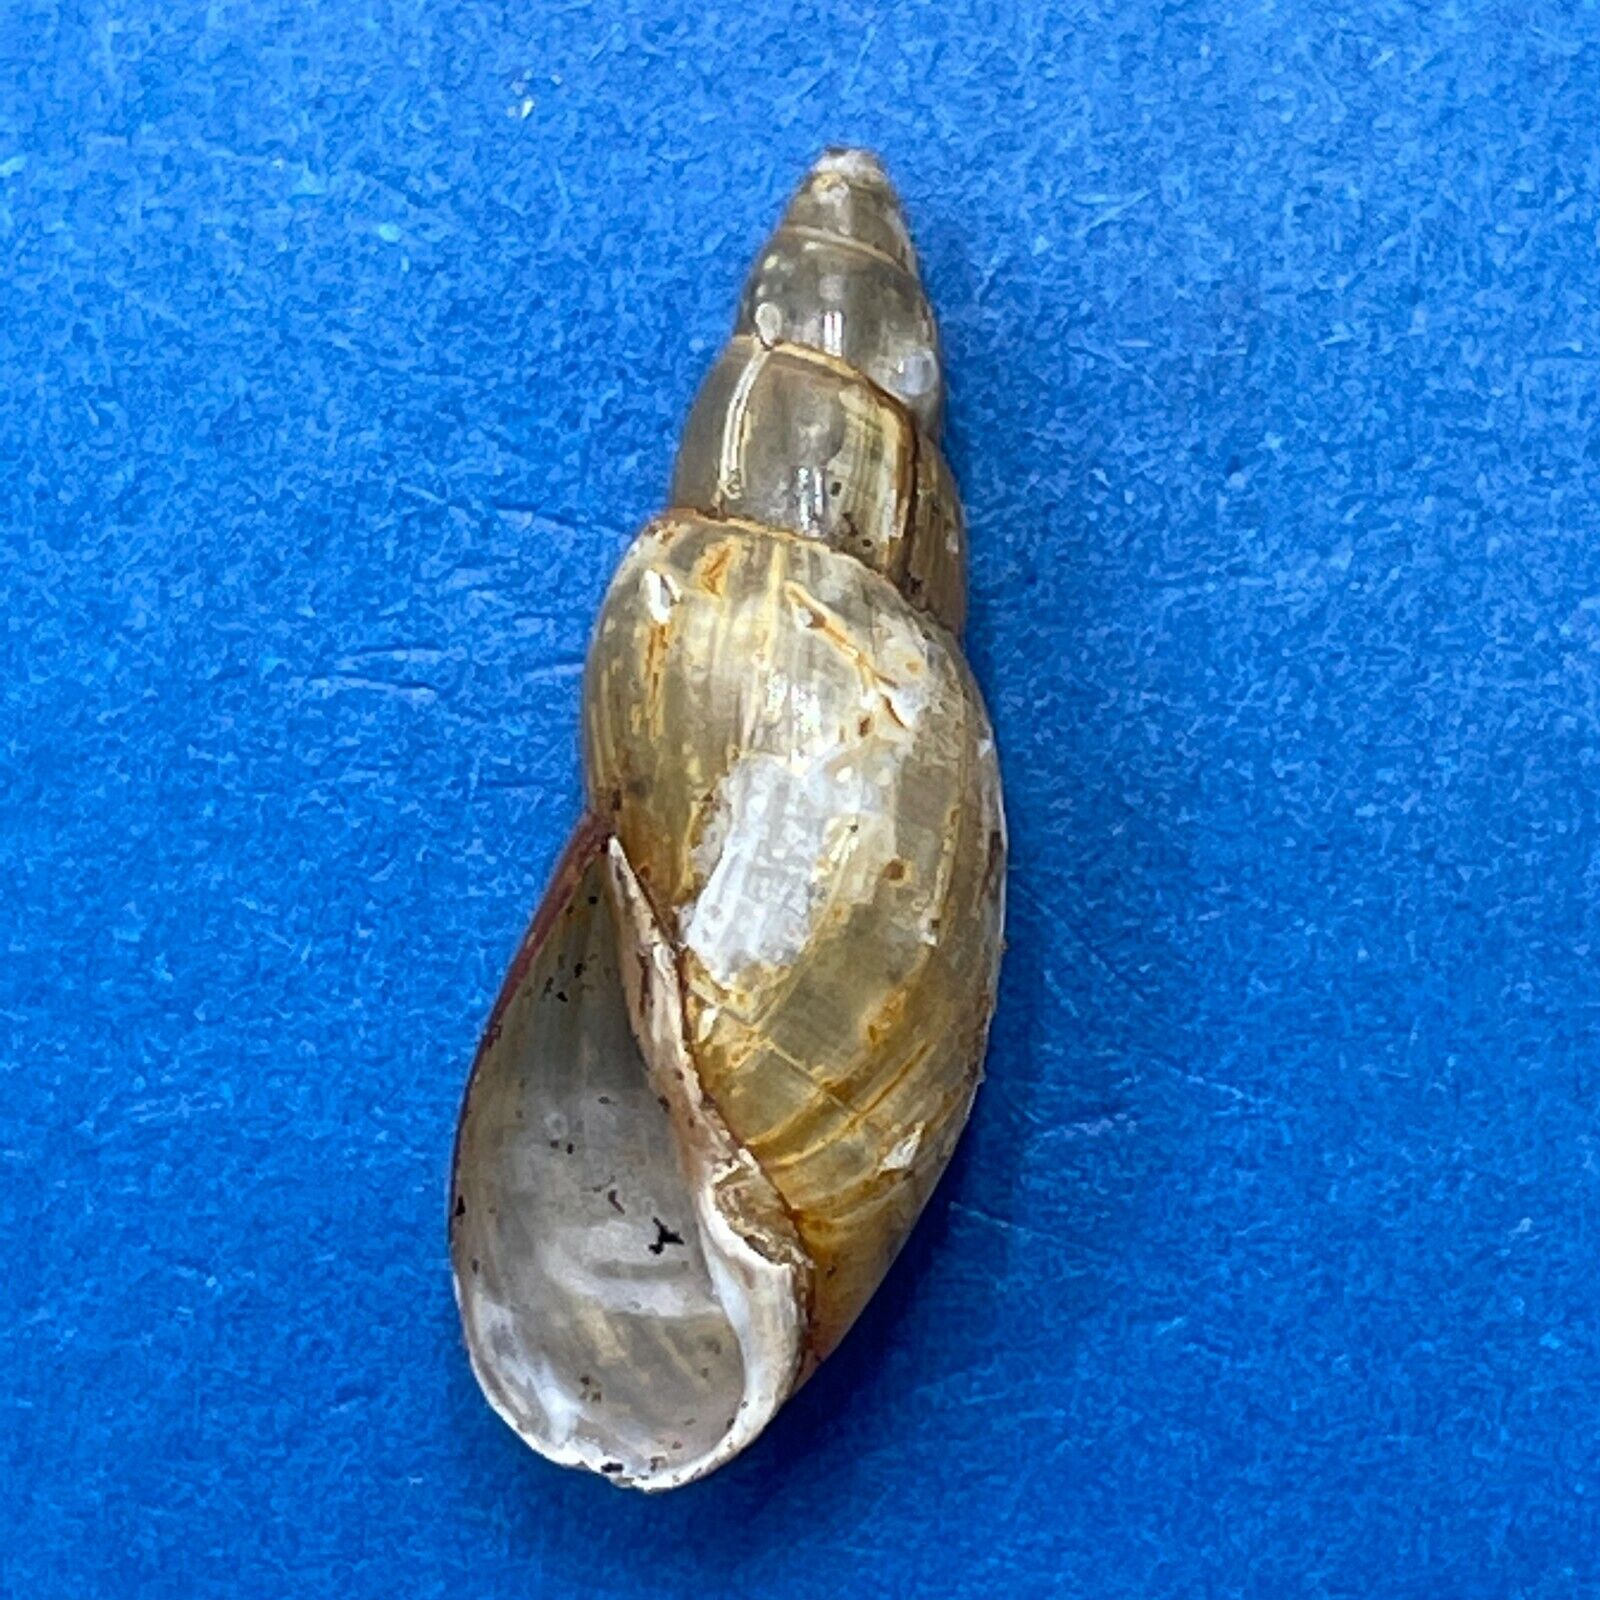 #2 Aplexa hypnorum 16.6mm F+ Pardubice, Czech Republic Physidae Freshwater Snail